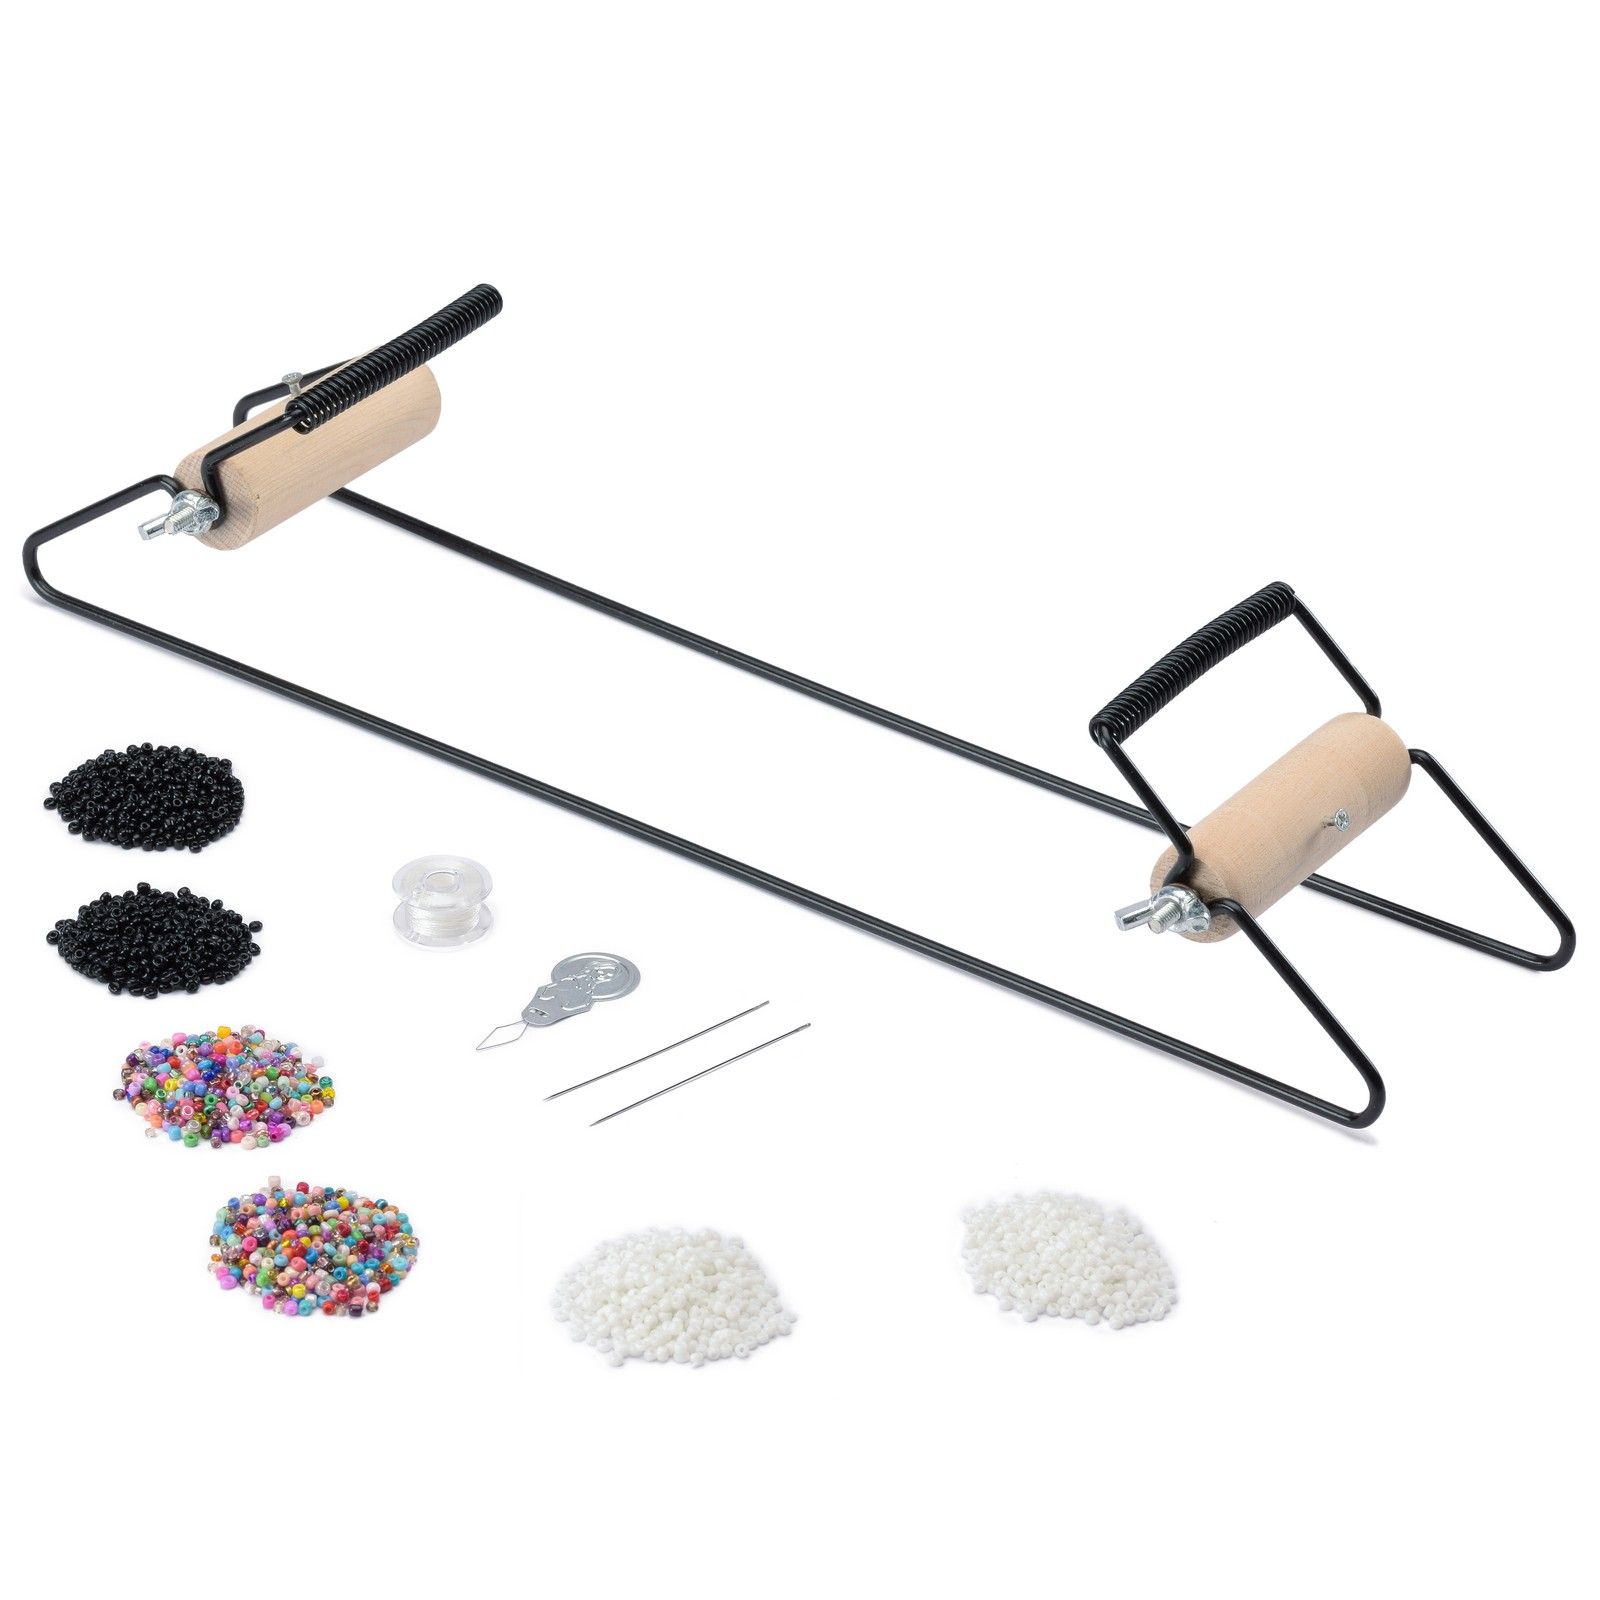 Wooden Bead Loom Kit, Beginners Bead Weaving Kit, Includes Beads